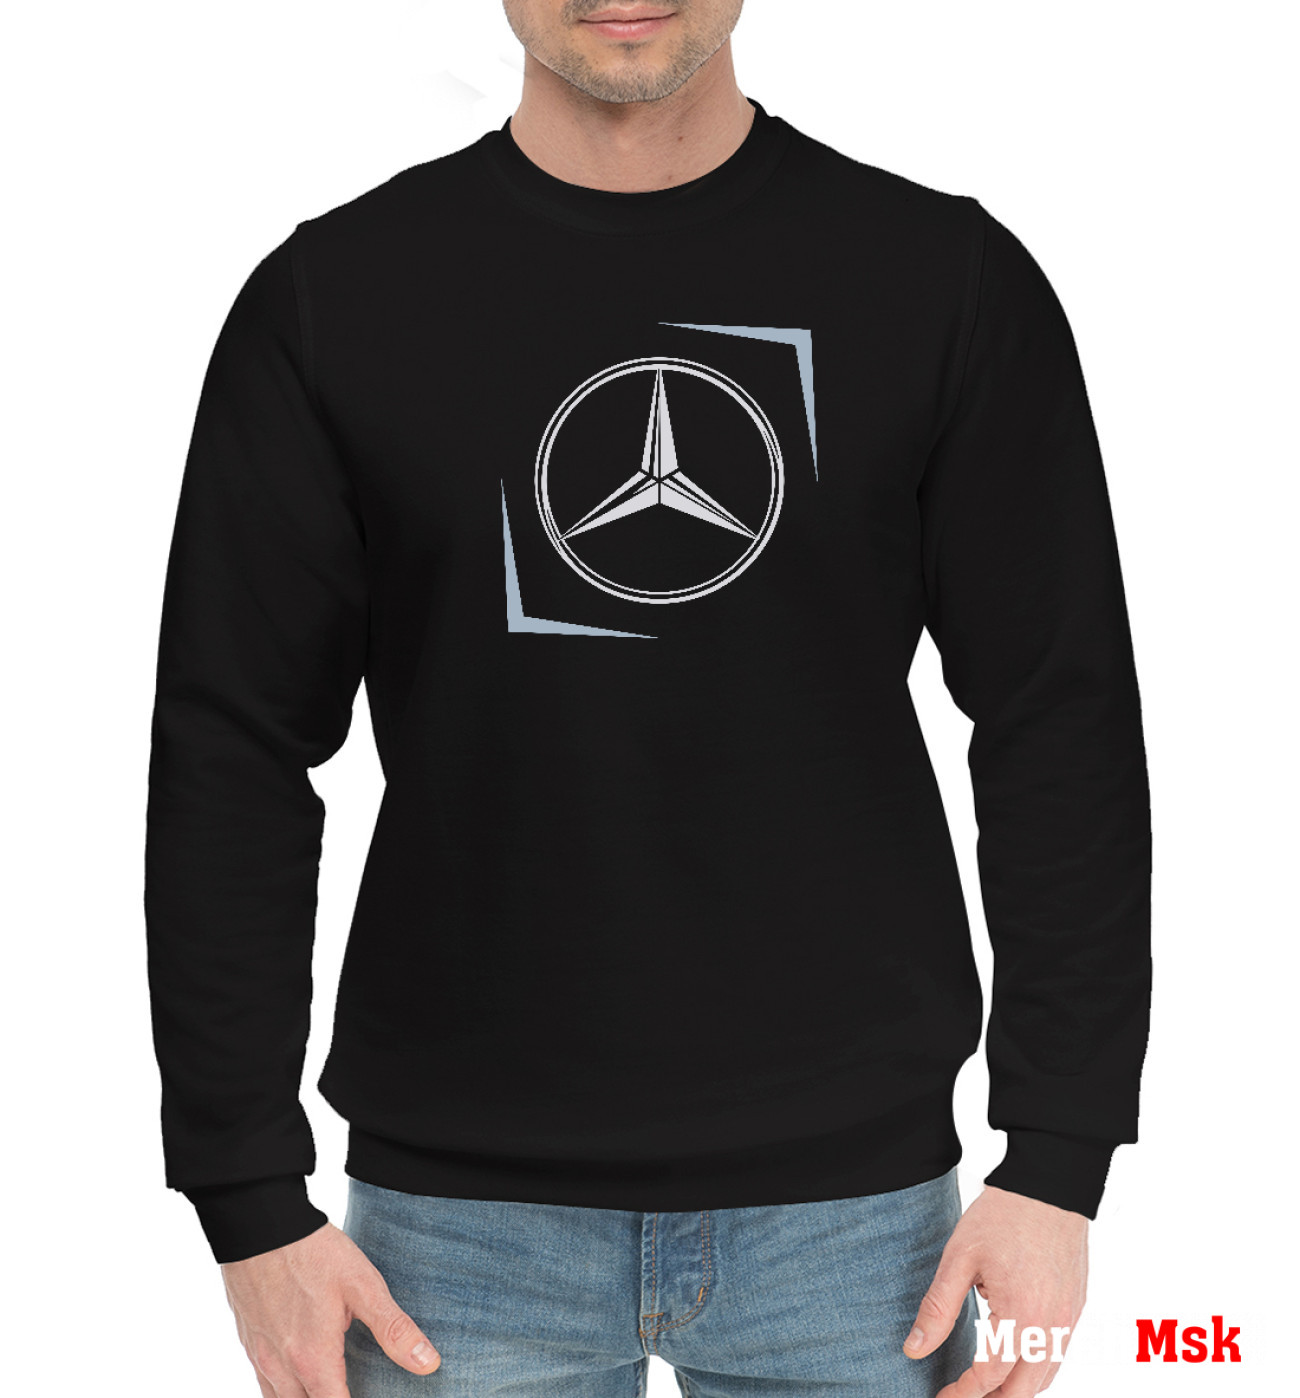 Мужской Хлопковый свитшот Mercedes - Lines, артикул: MER-873334-hsw-2